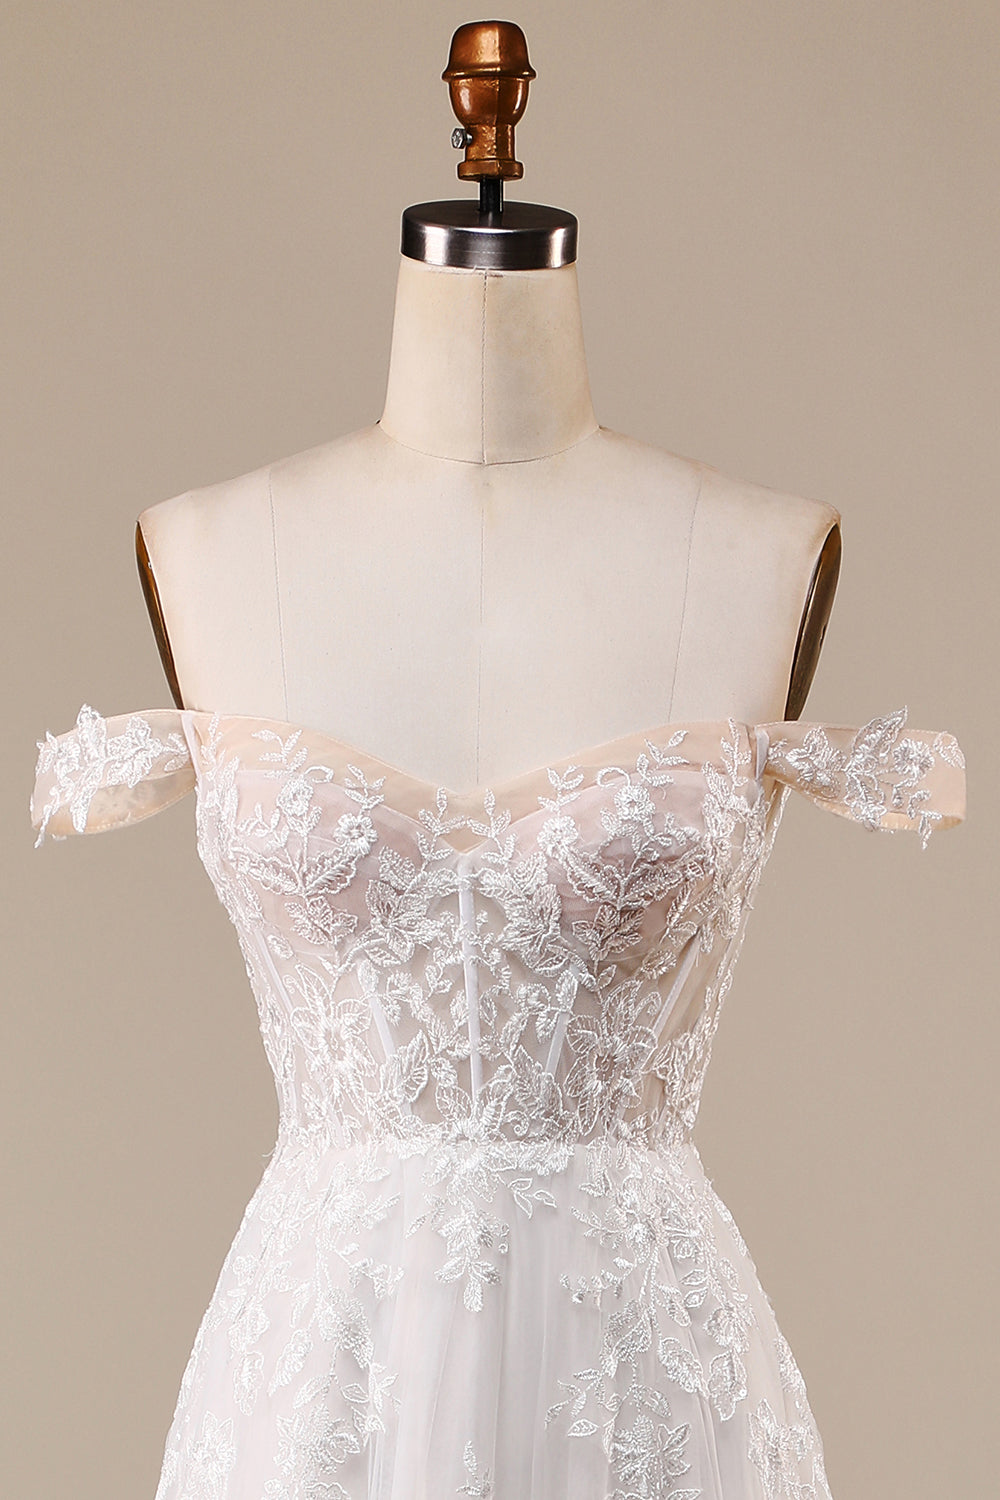 Ivory A Line Detachable Off the Shoulder Corset Tulle Wedding Dress